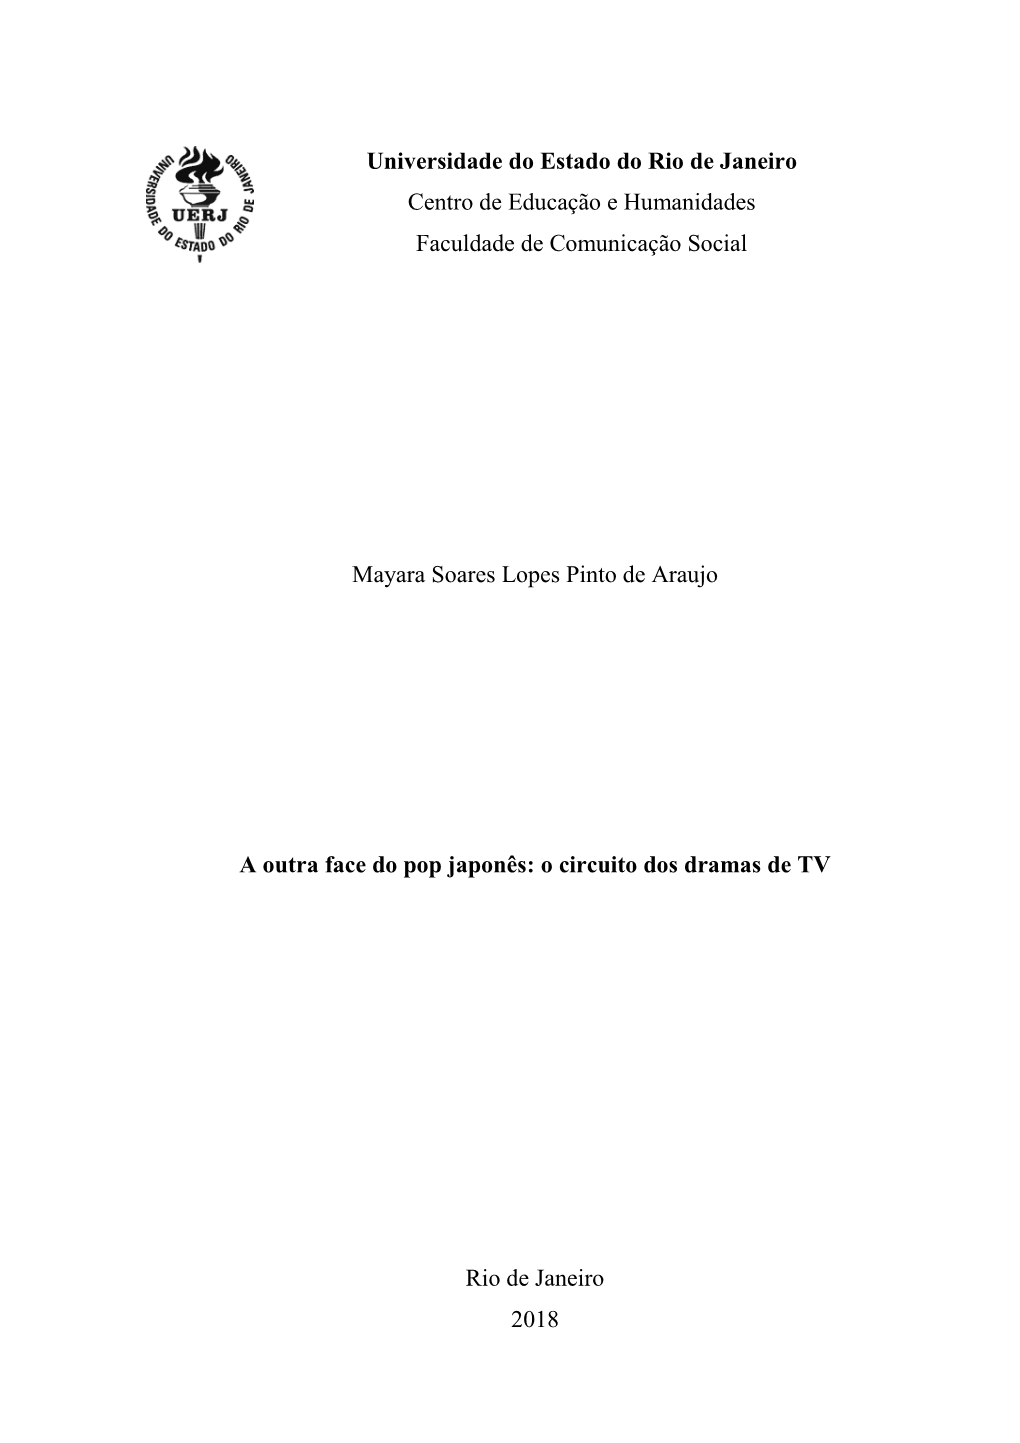 Dissert Mayara Soares Lopes Pinto De Araujo.Pdf